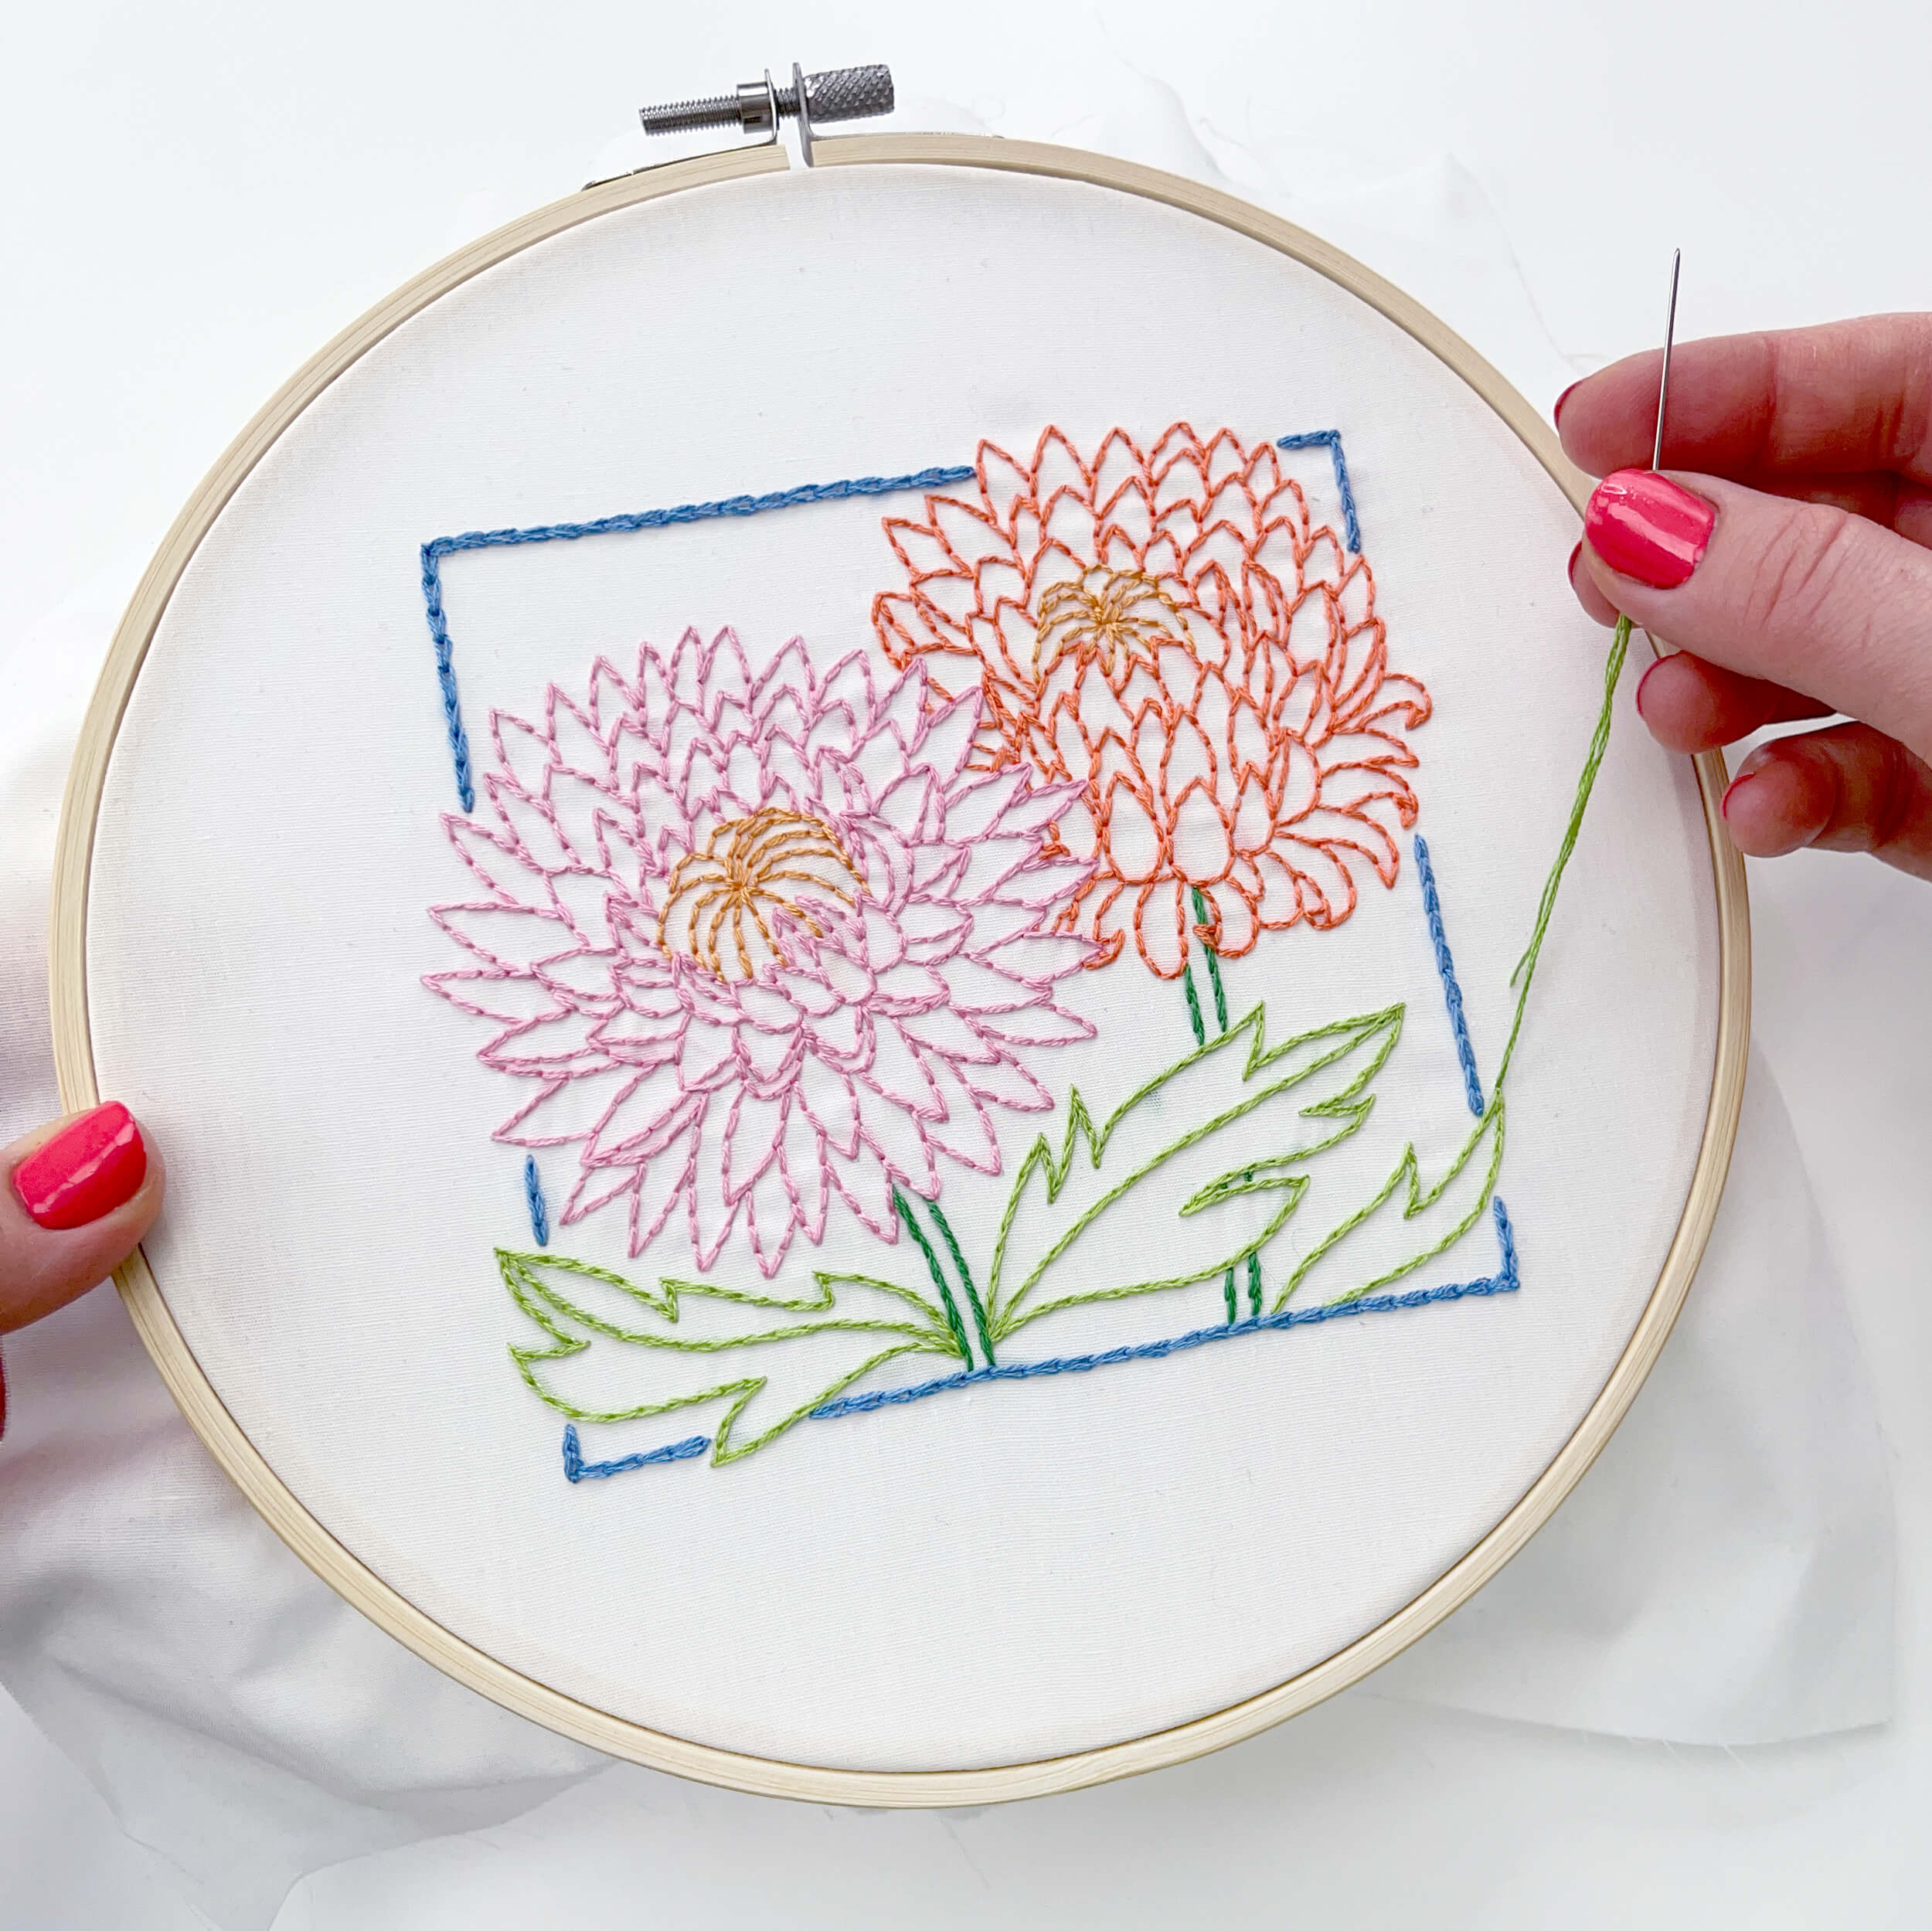 Hand stitching the November Chrysanthemum embroidery pattern